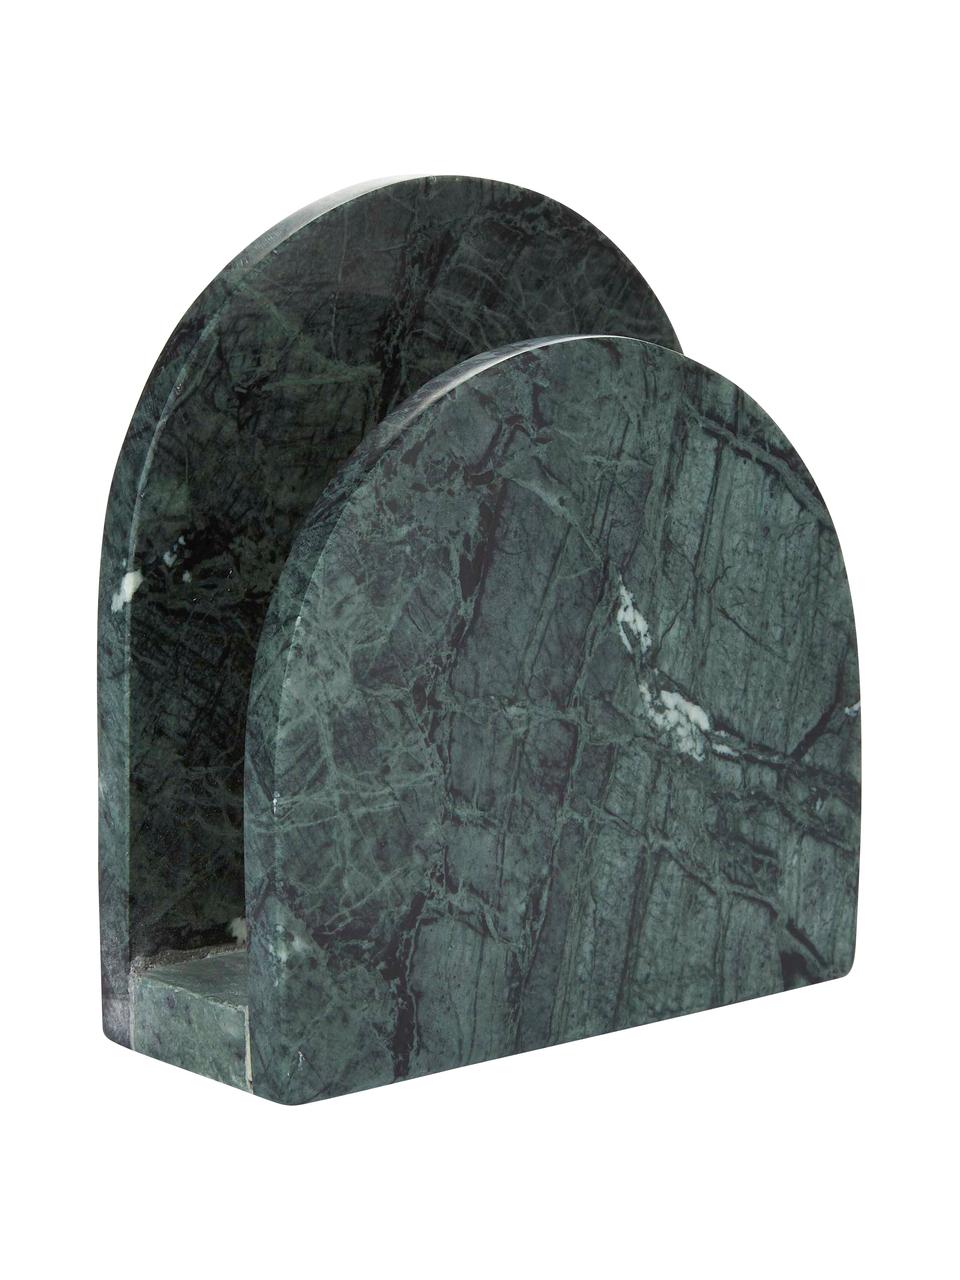 Porte-serviettes marbre Charlton, Marbre, Vert, larg. 15 x haut. 14 cm